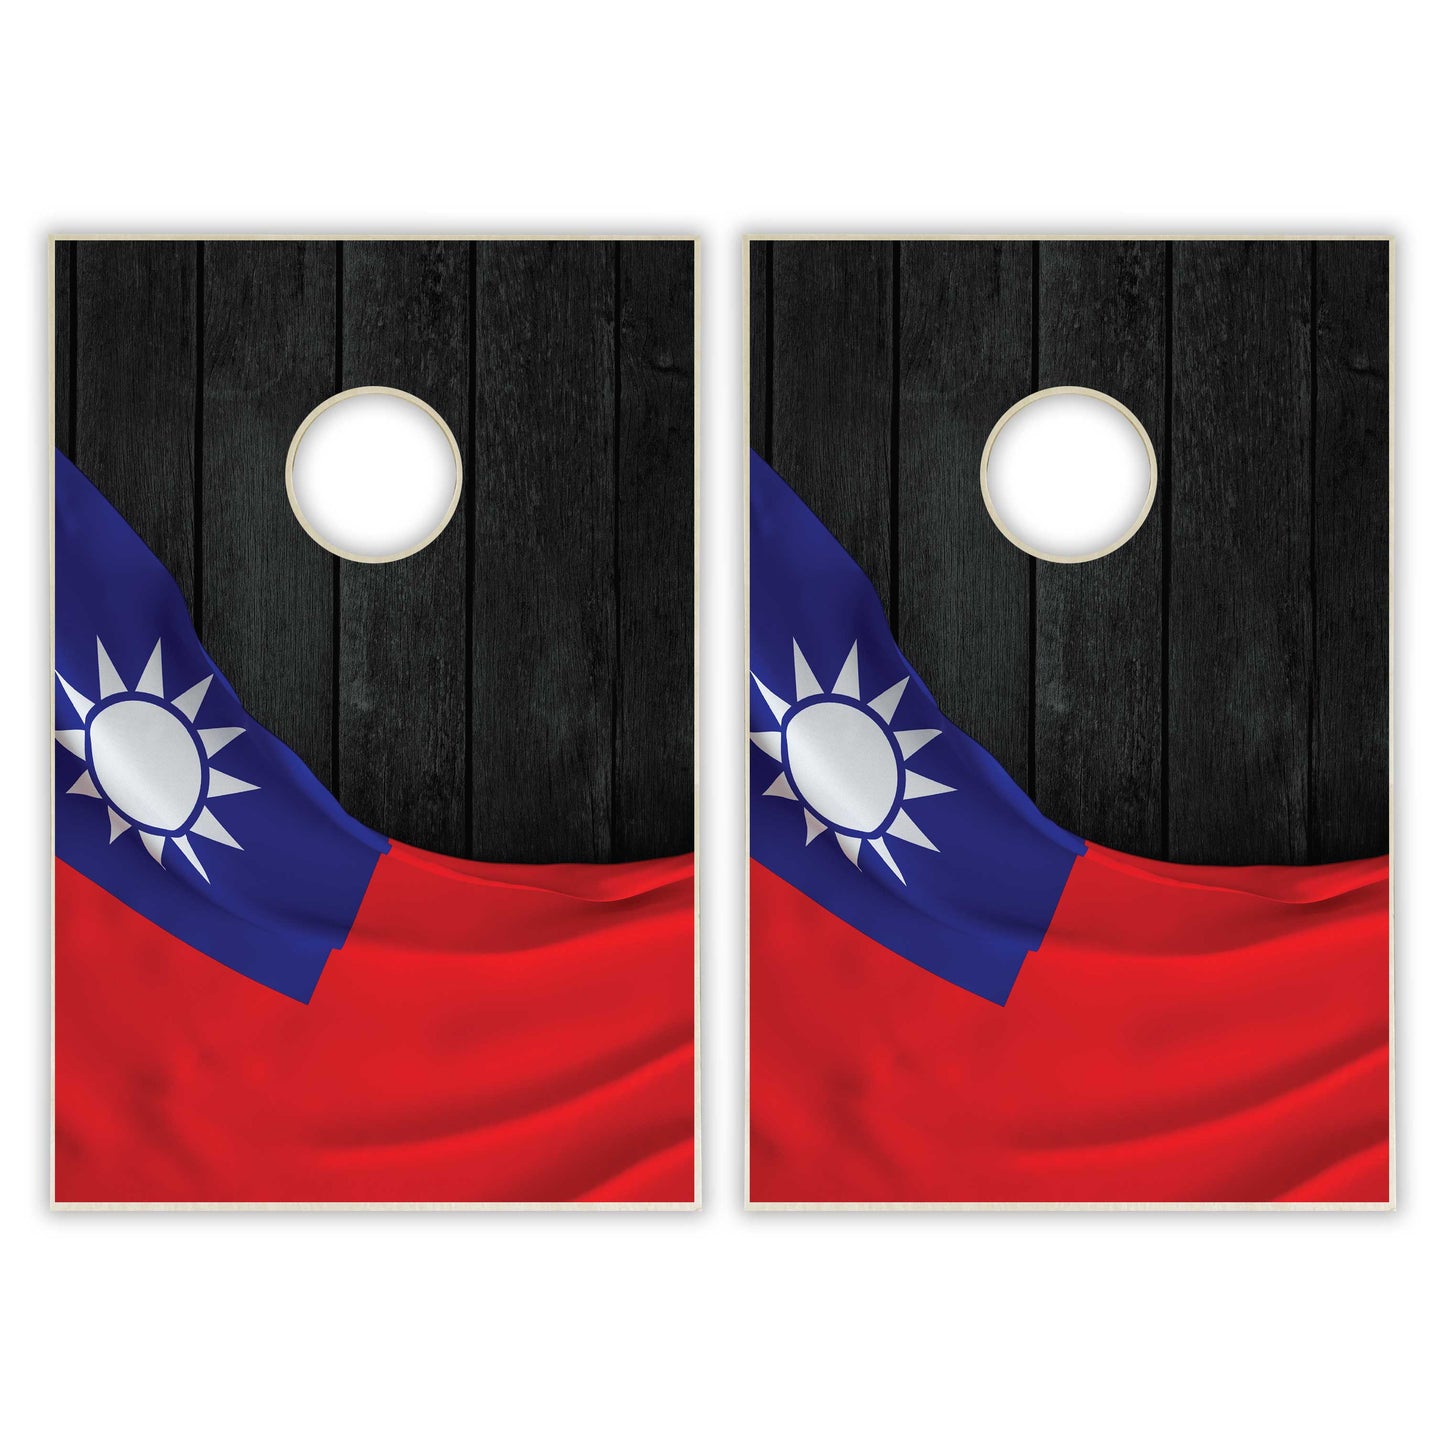 Taiwan Flag Tailgate Cornhole Set - Black Wood